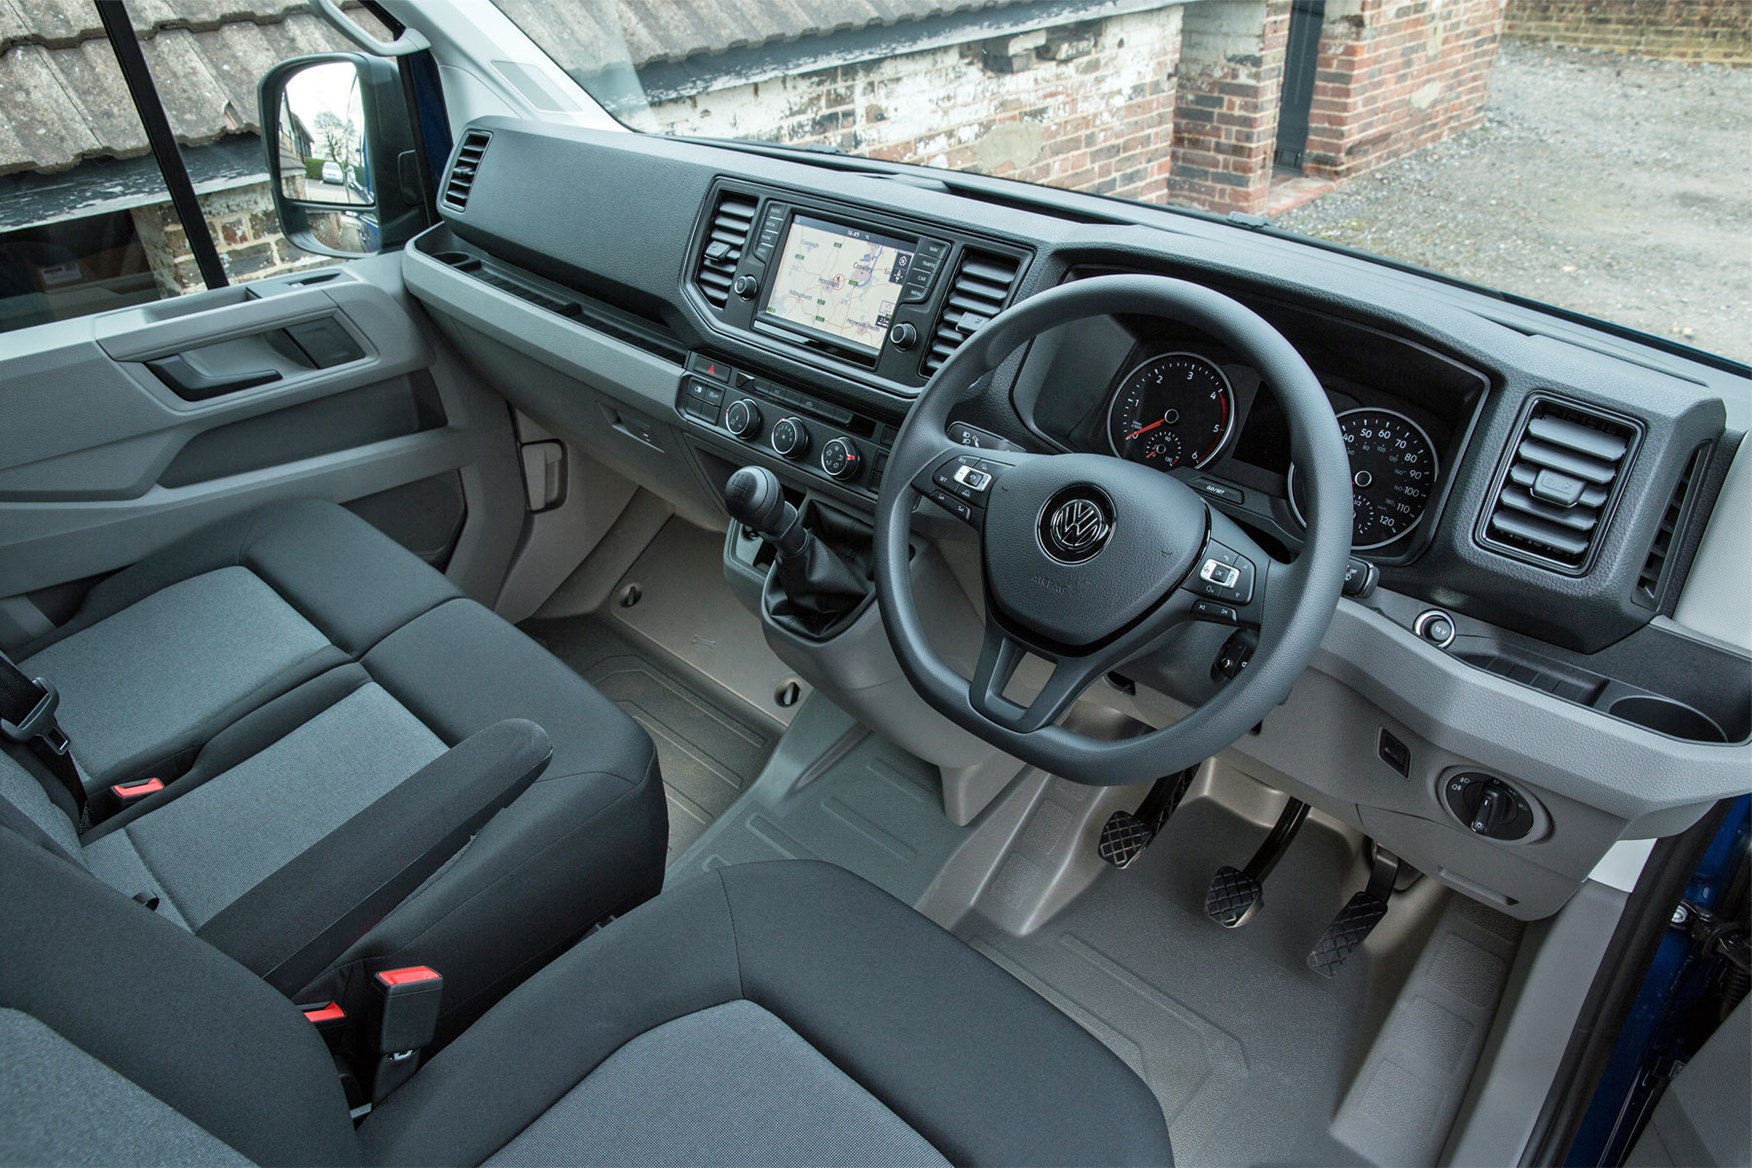 VW Crafter (2017-on) cab interior